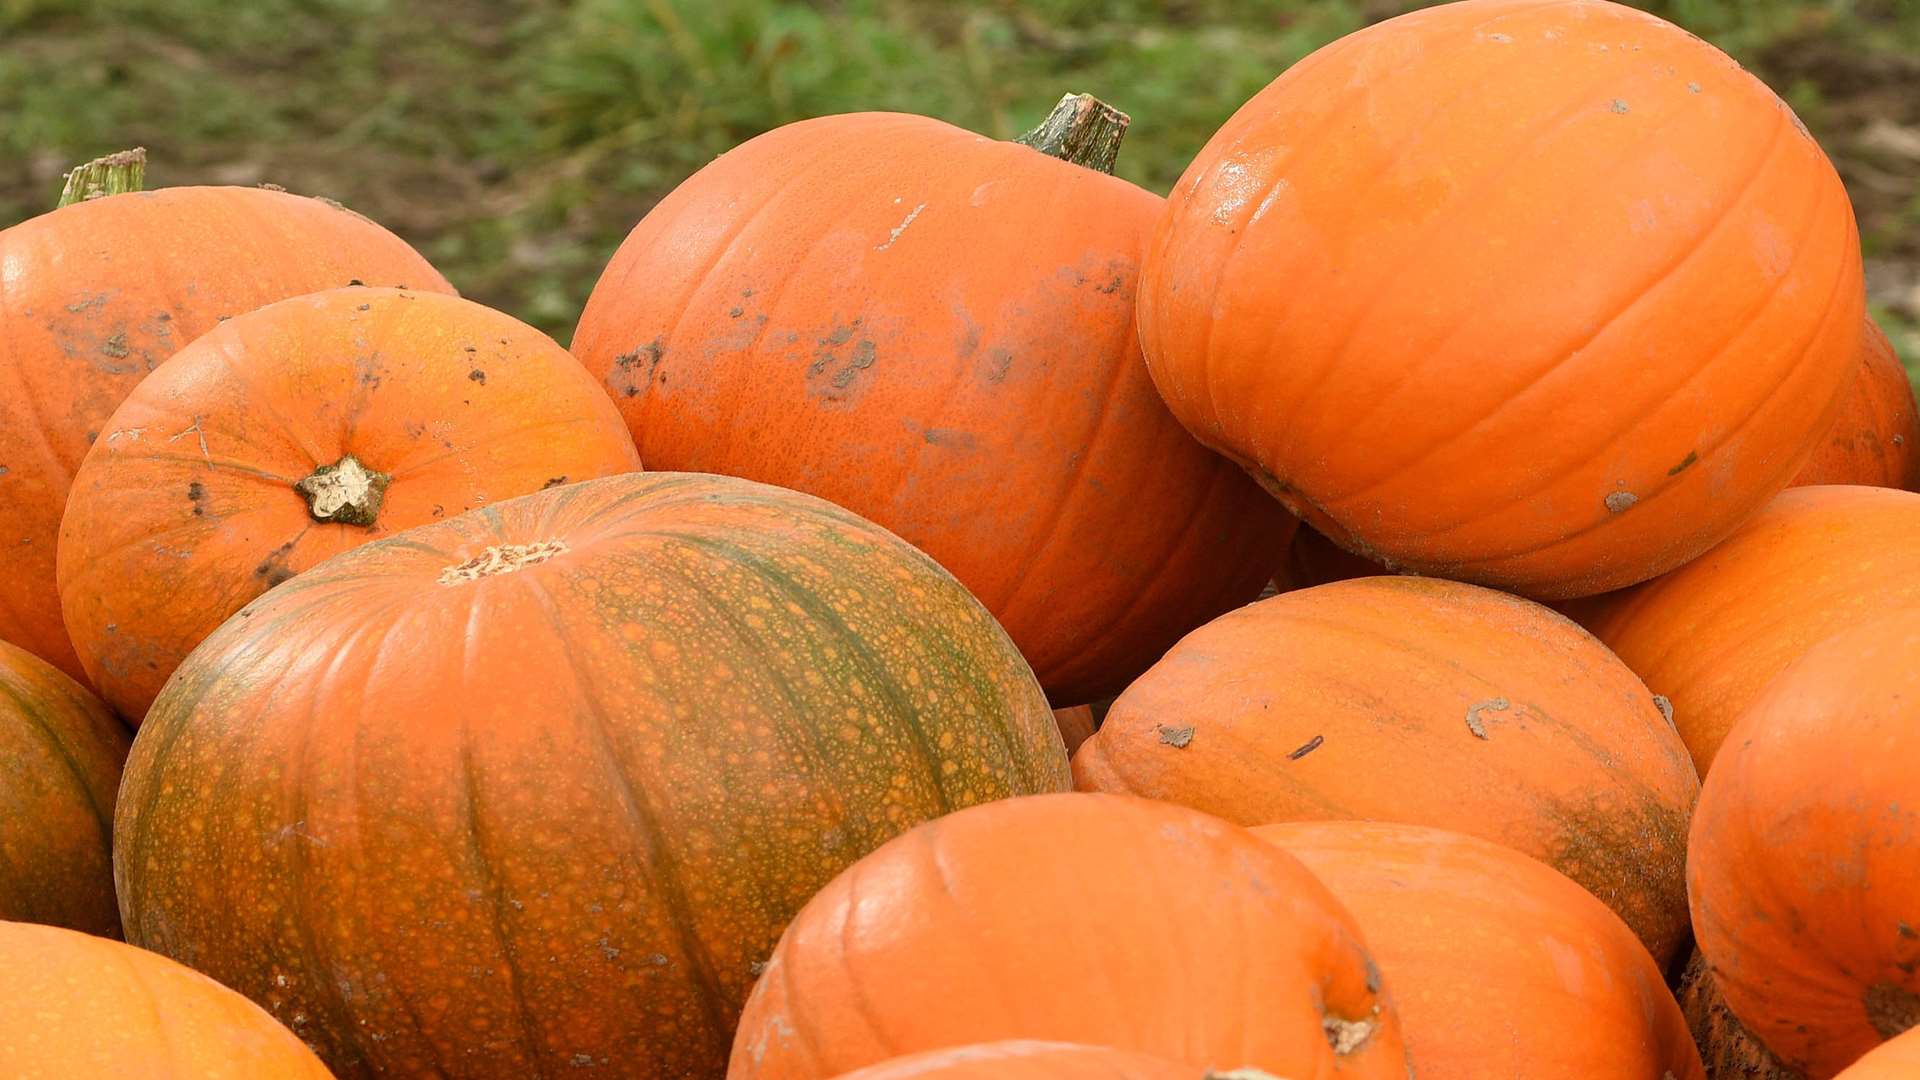 Why not go pumpkin picking?